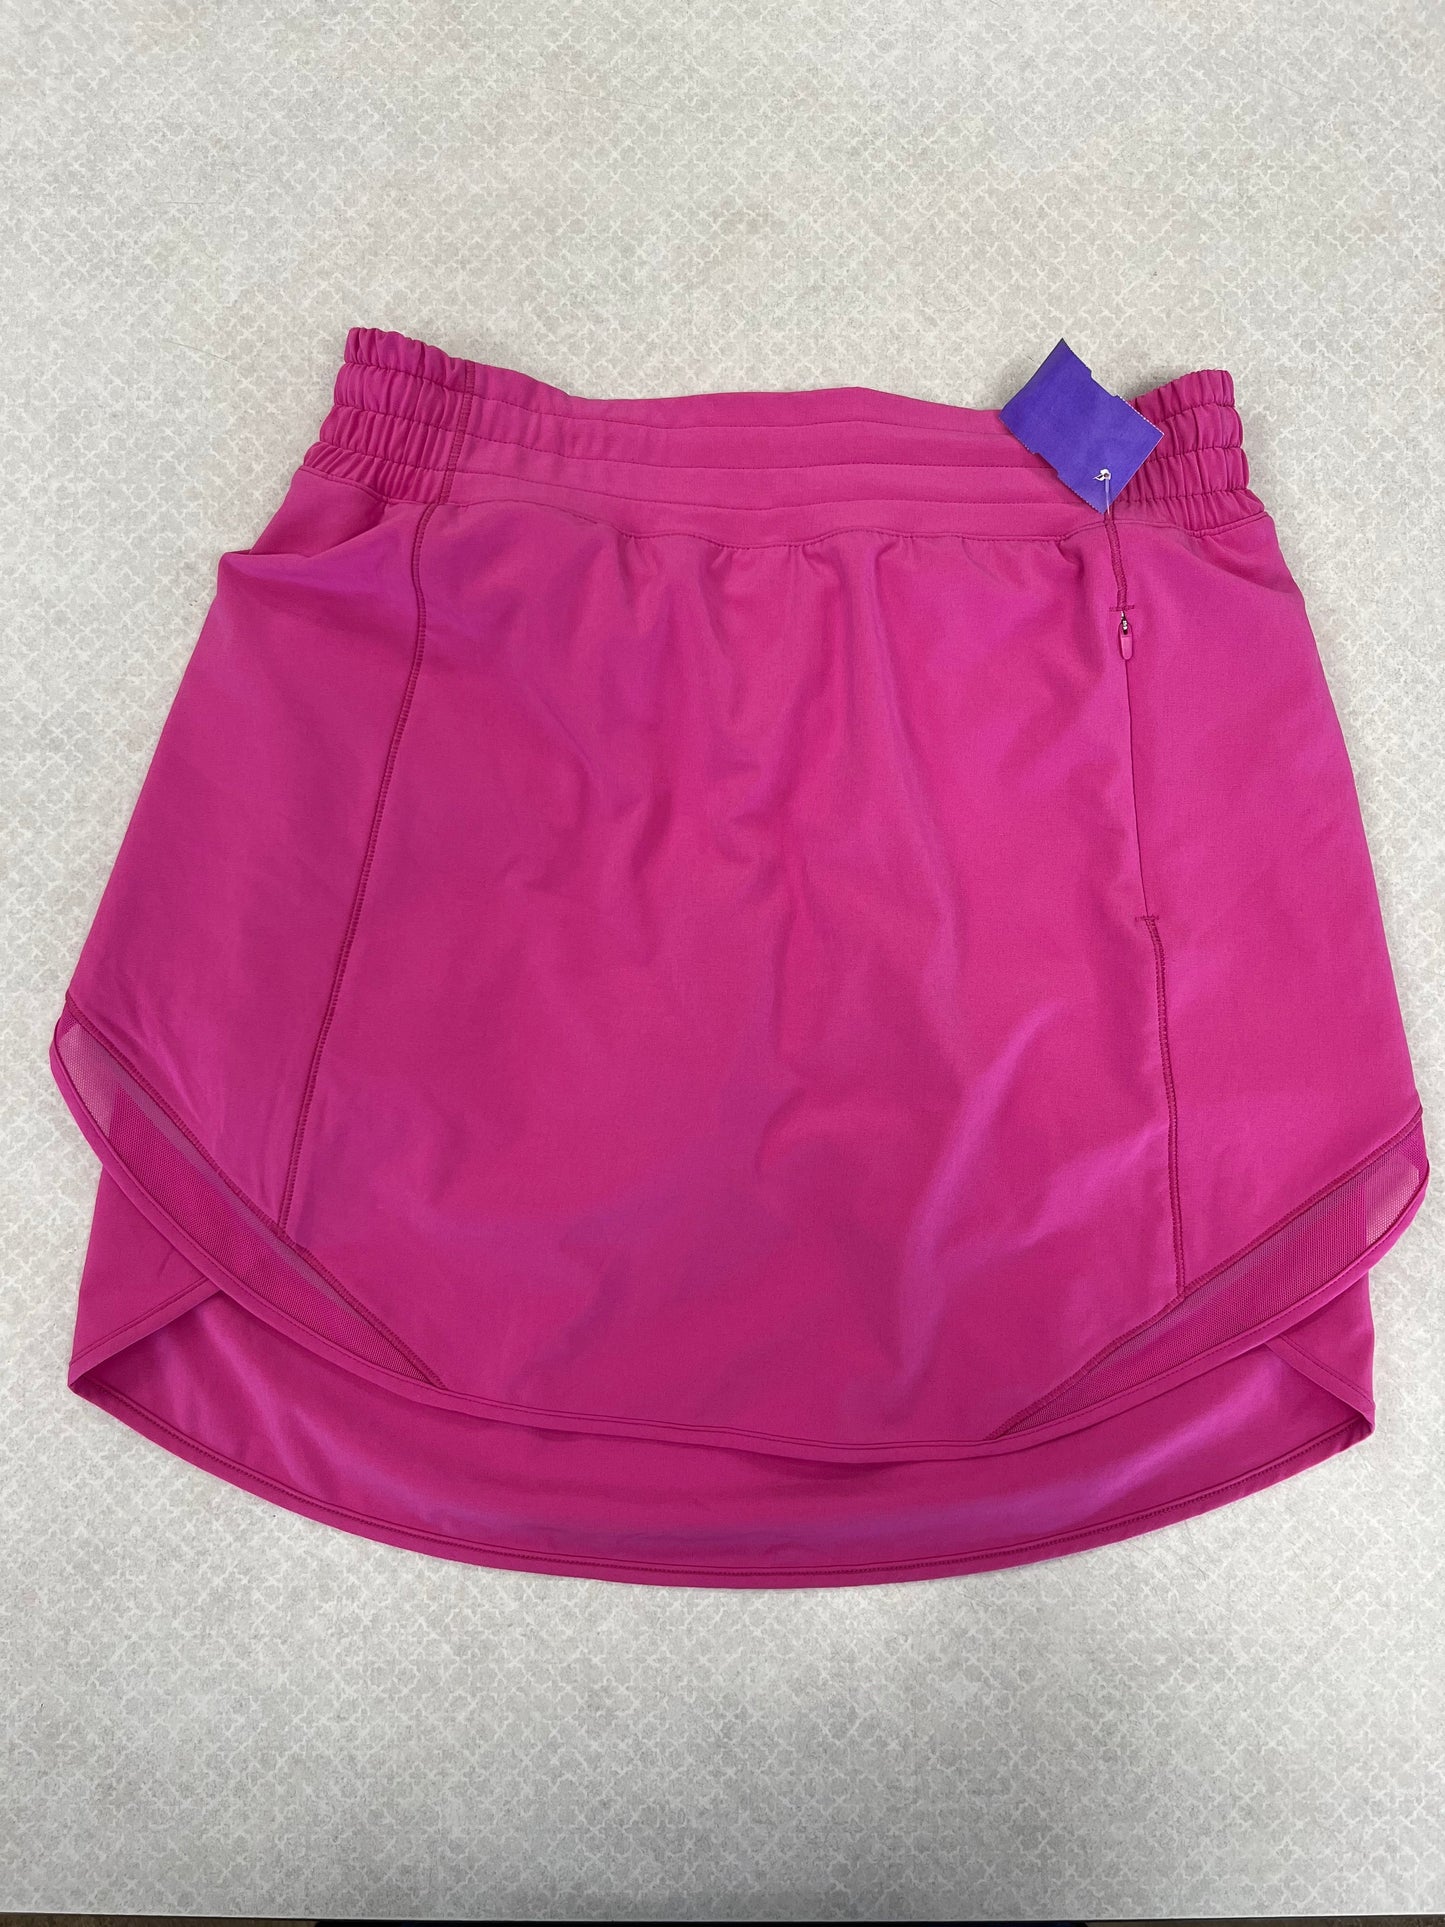 Pink Athletic Skort Lululemon, Size 6